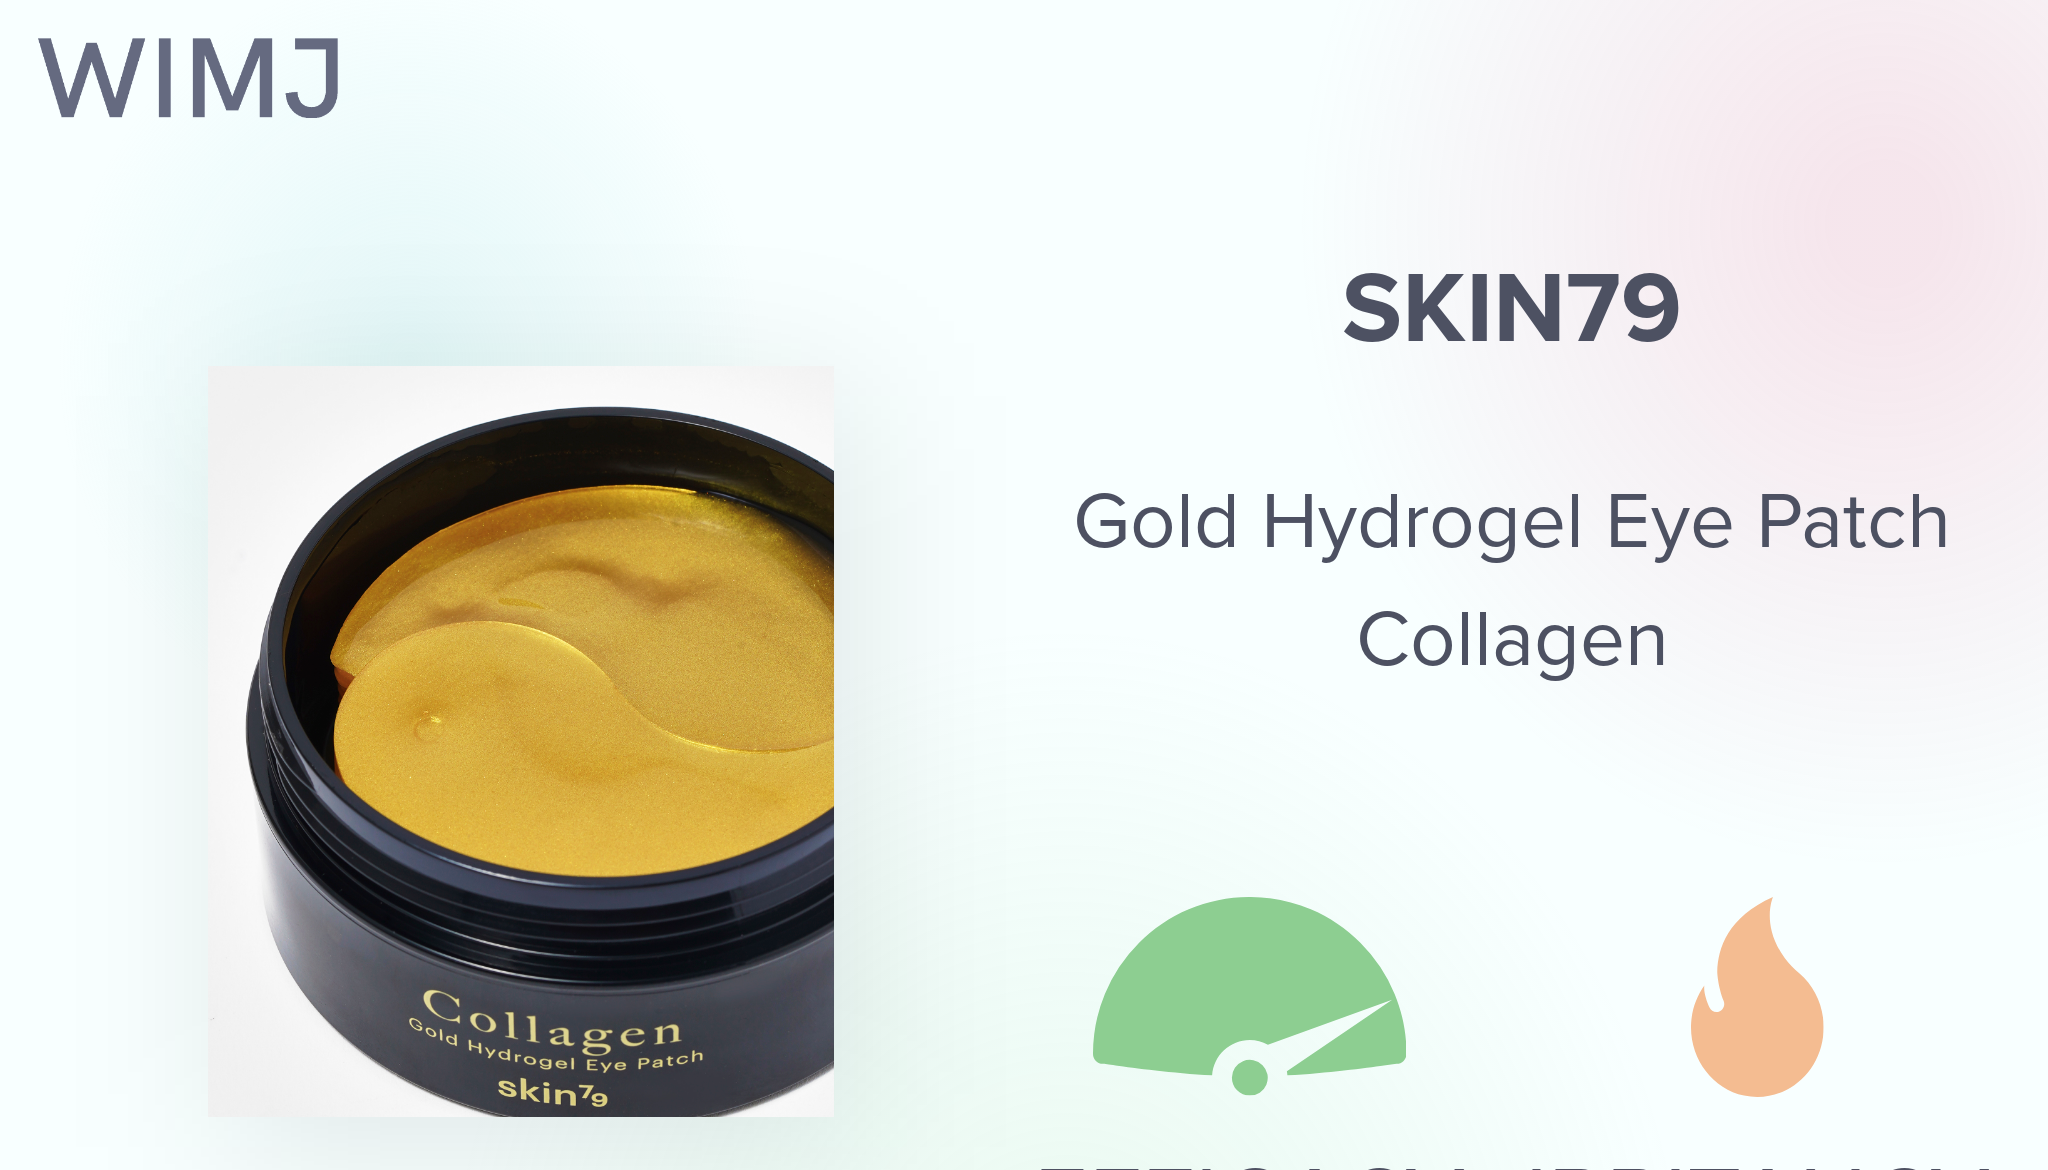 Review: Skin79 - Gold Hydrogel Eye Patch Collagen - WIMJ